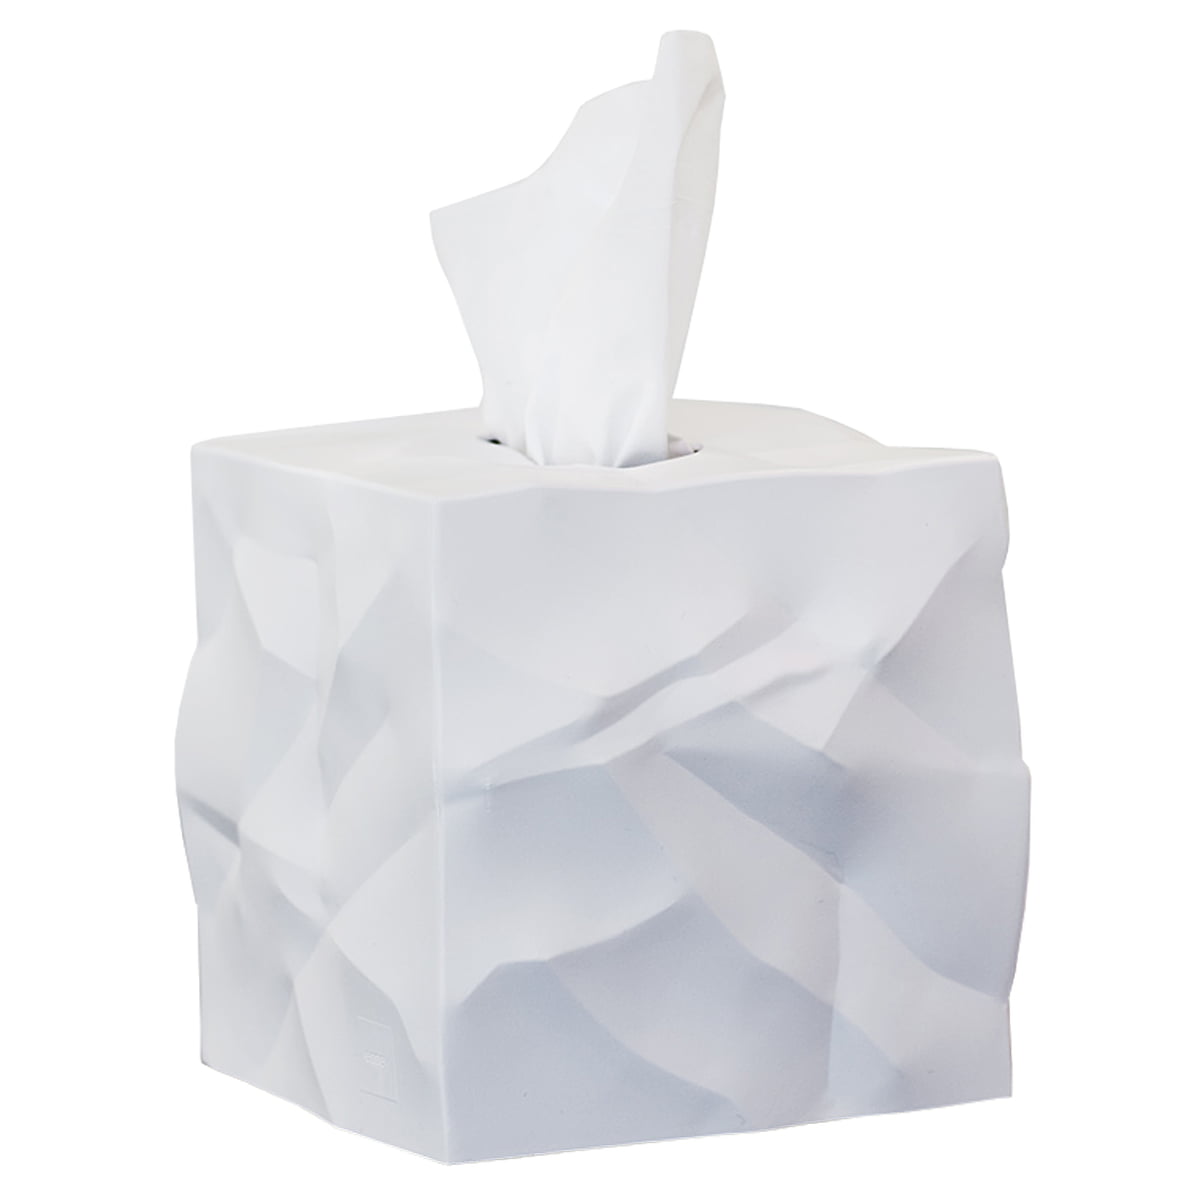 Boîte à mouchoirs carrée design blanche wipy essey - Kdesign